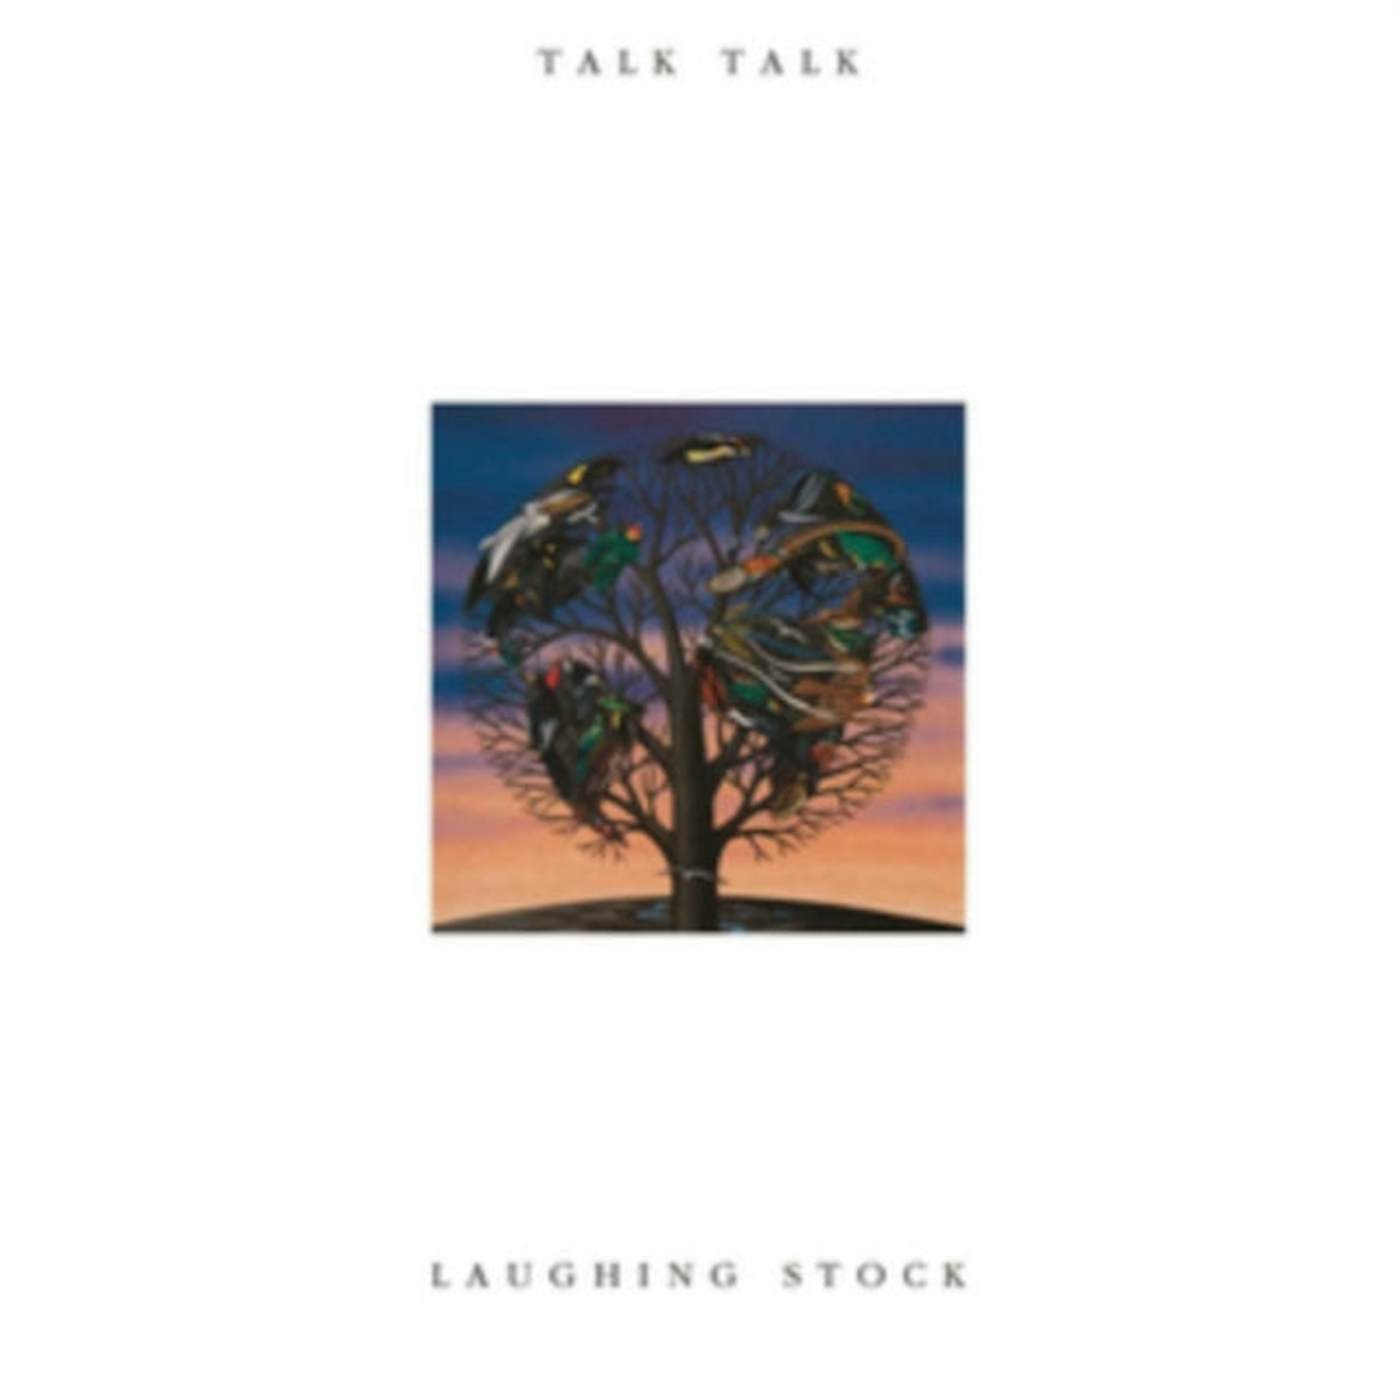 Talk Talk LP Vinyl Record - Laughing Stock